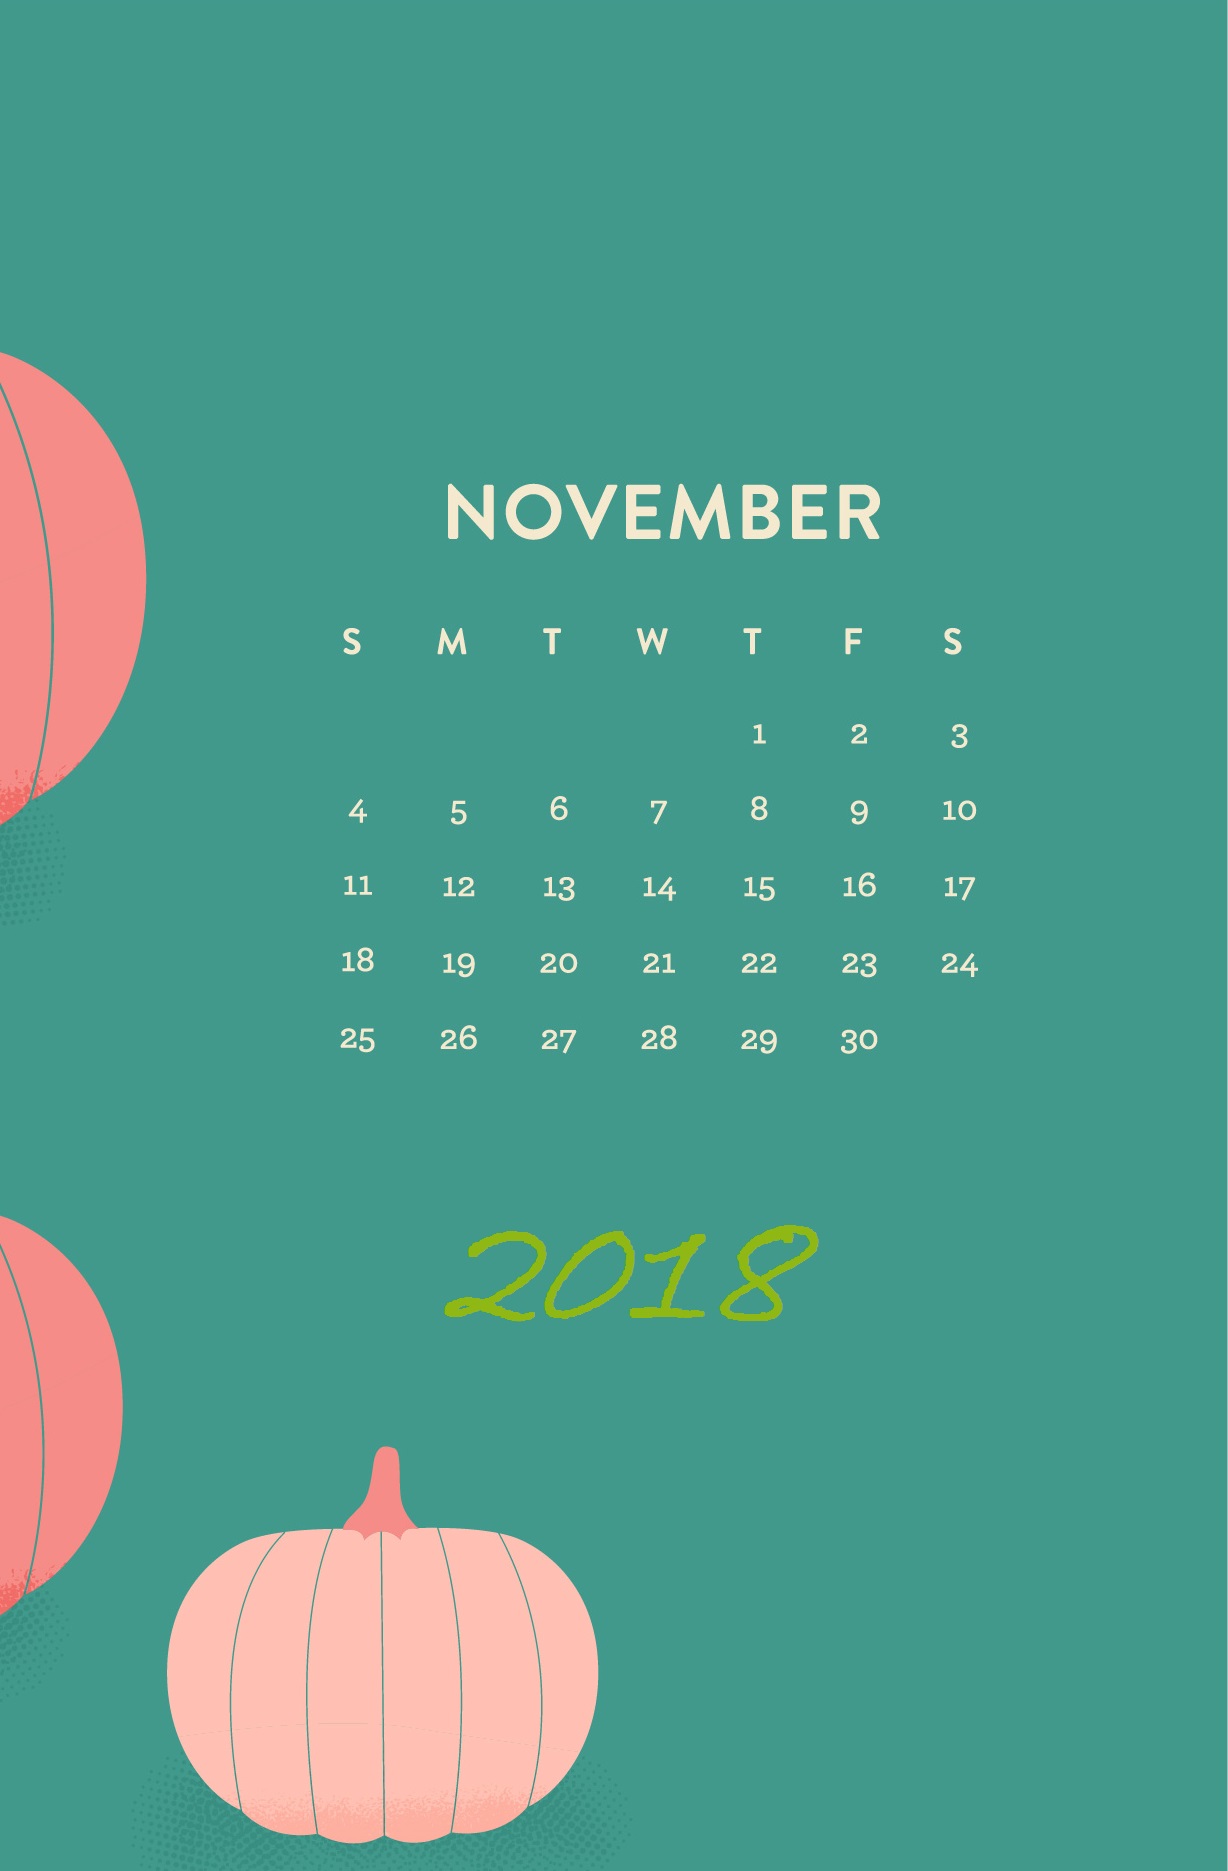 november-2018-wallpaper-with-calendar-november-2018-wallpaper